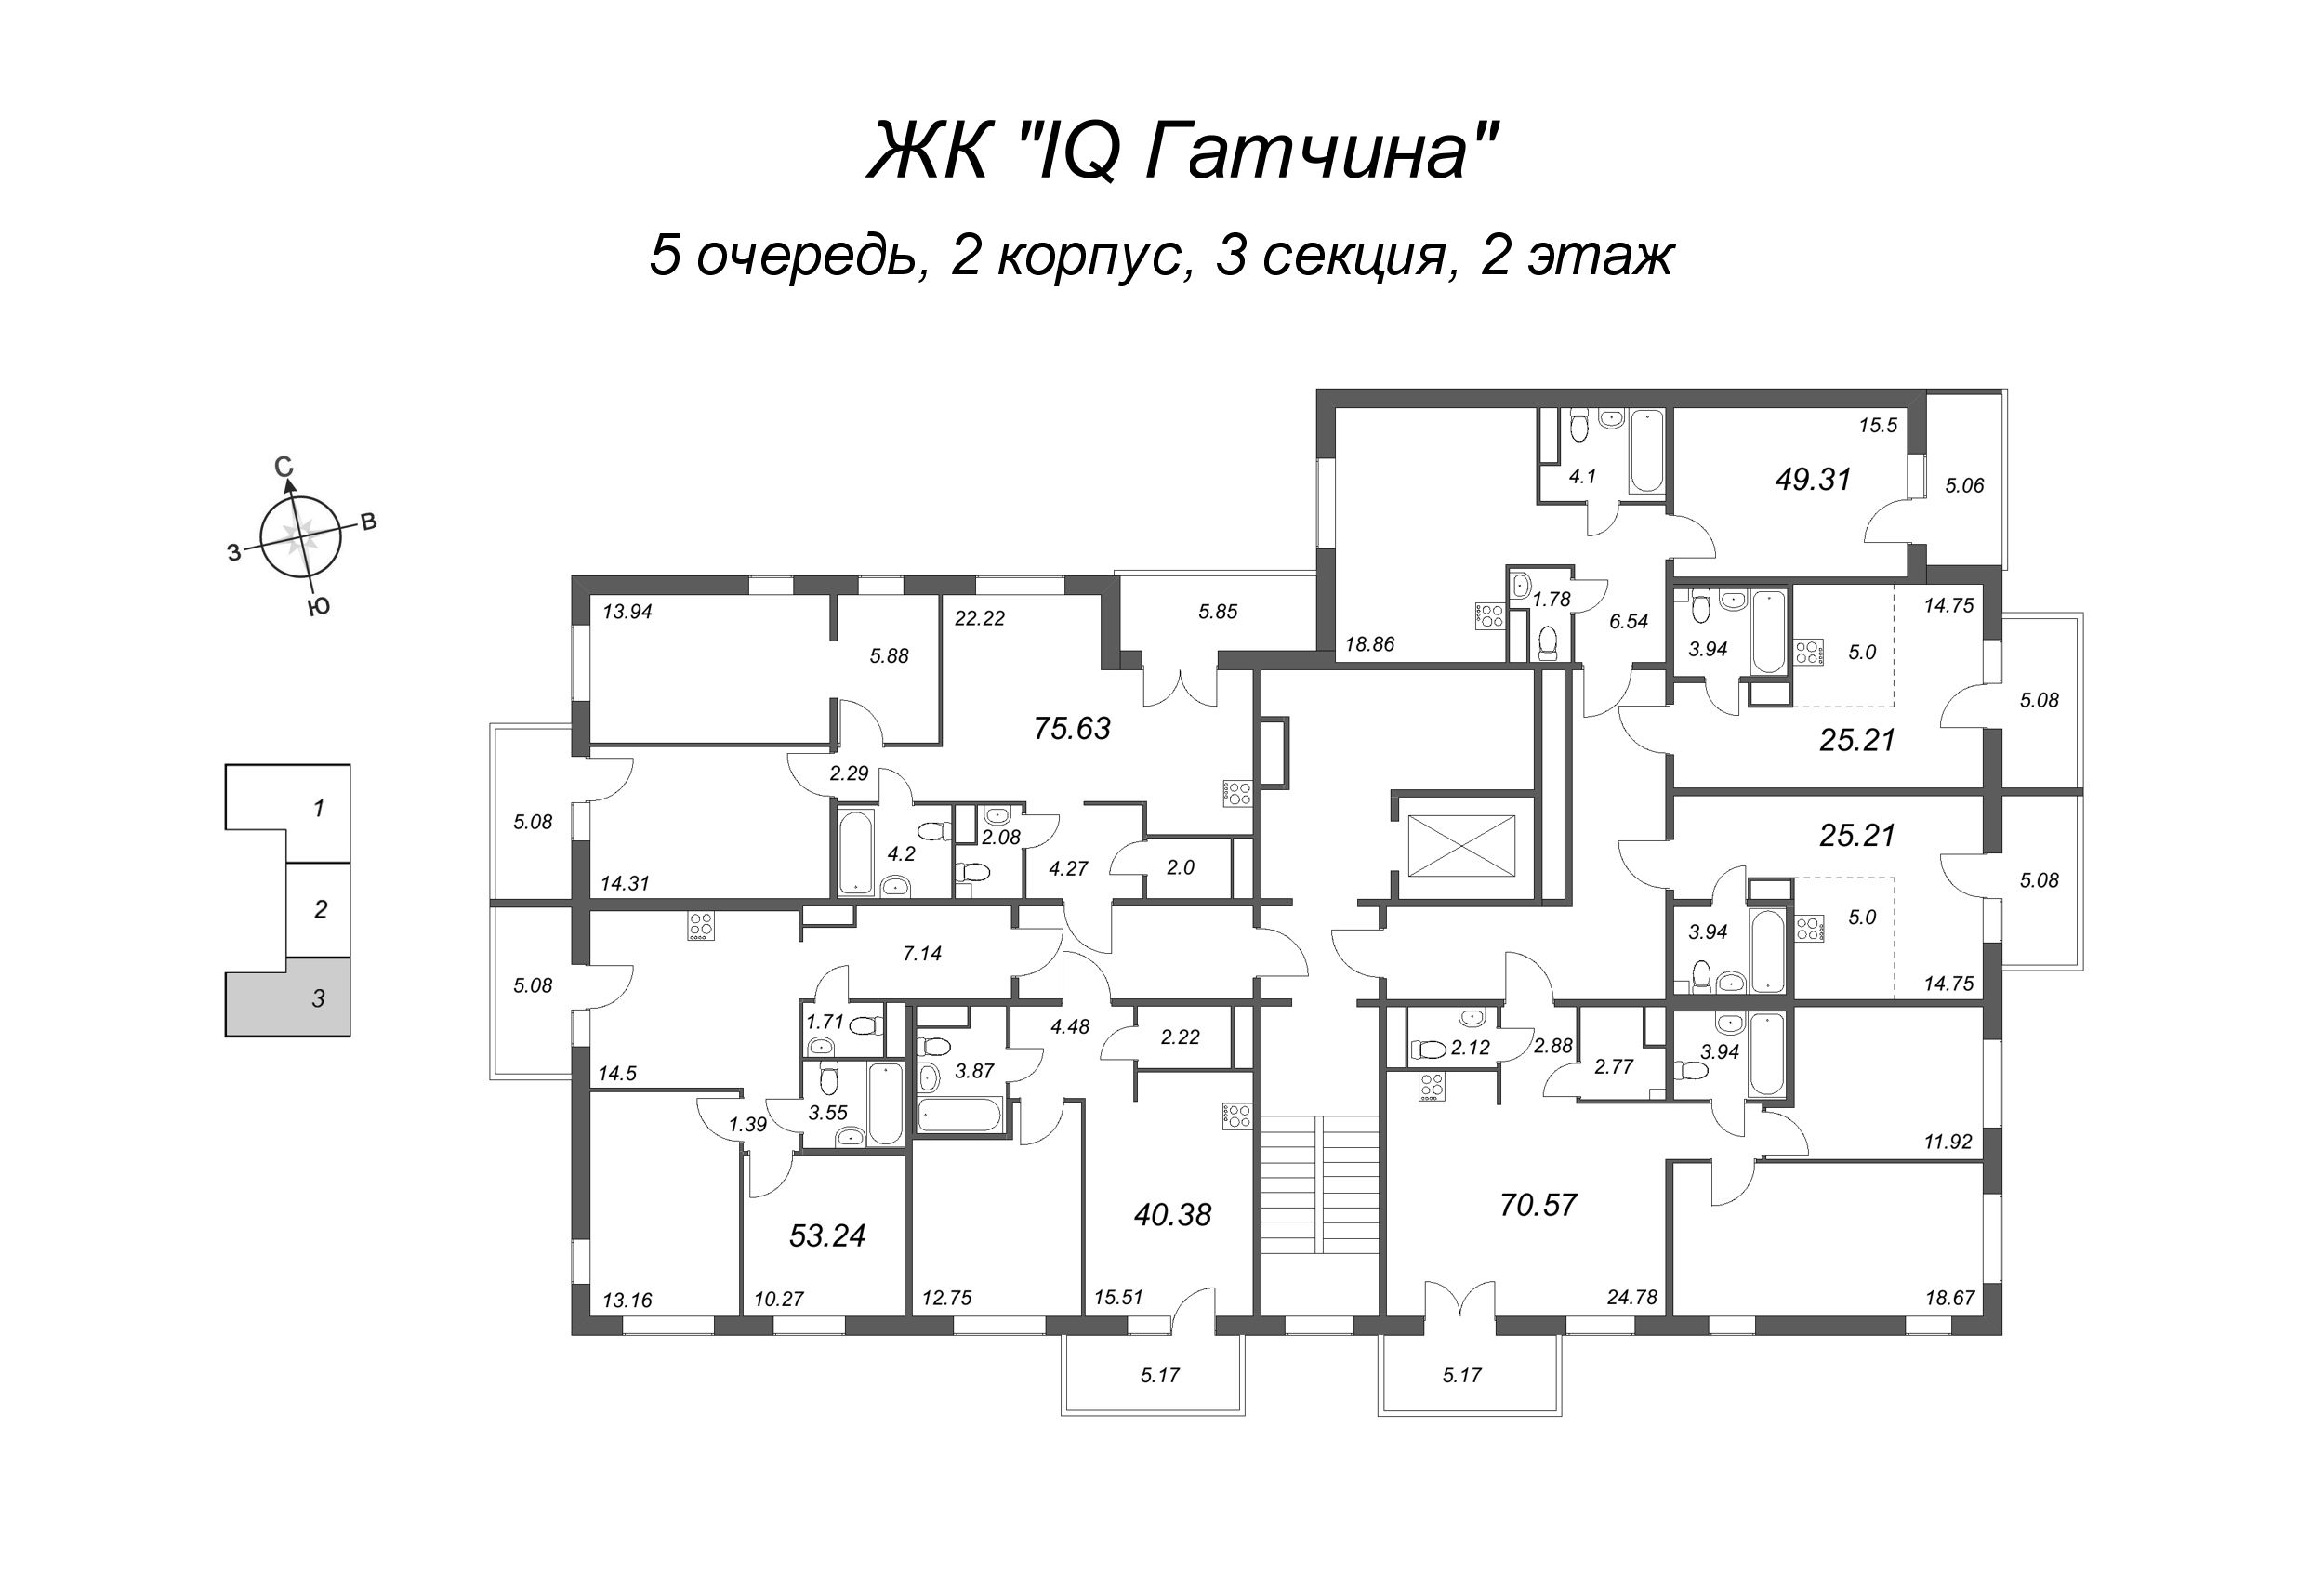 4-комнатная (Евро) квартира, 75.94 м² - планировка этажа